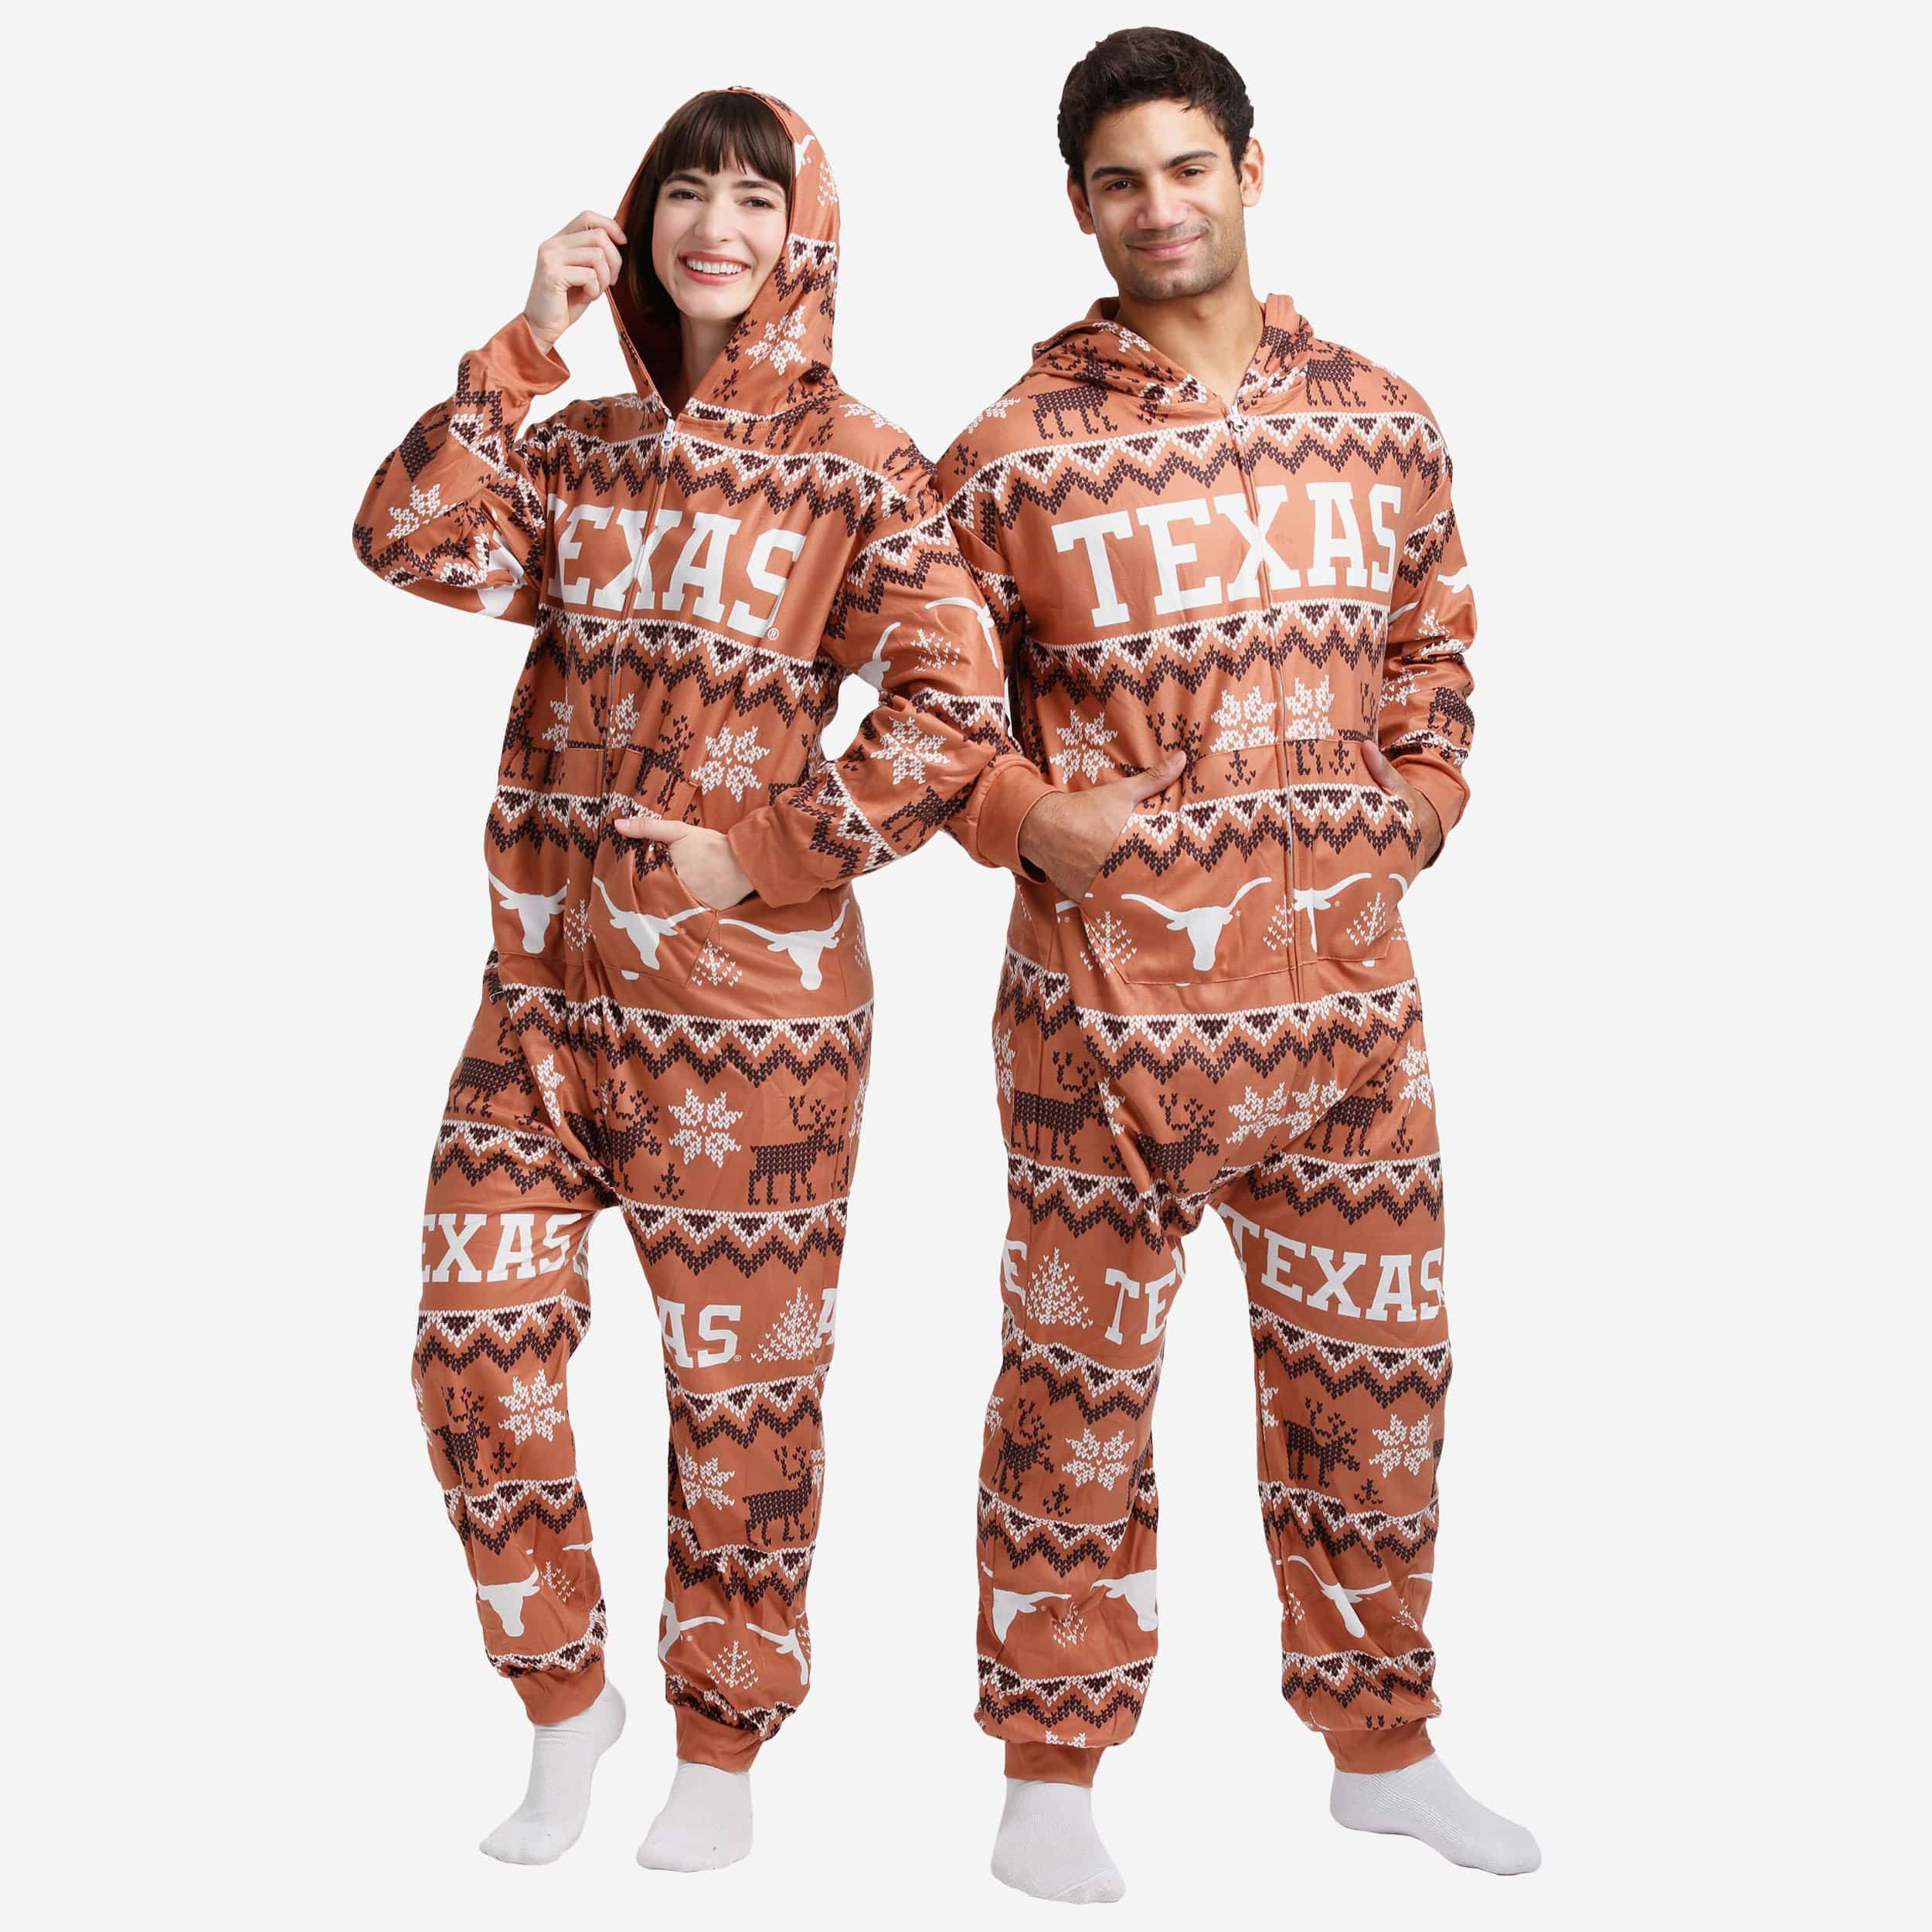 Utz Original Chip / Adult Onesie Pajamas